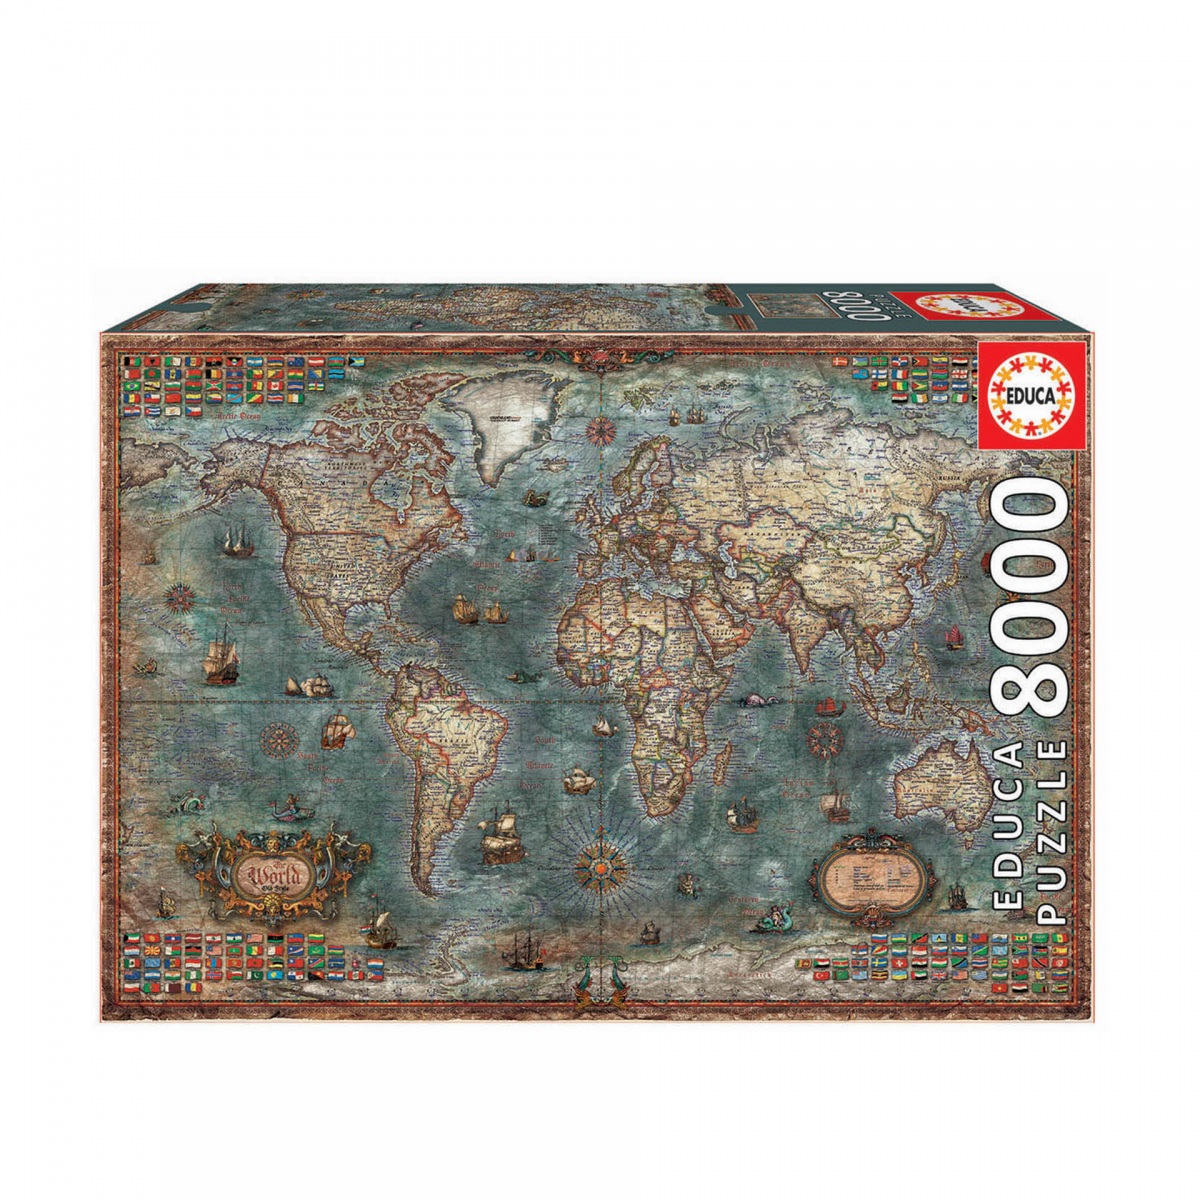 Puzzle Educa 8000 Peças Mapa Histórico Mundo - 64.02.01.0835.0173-UNC